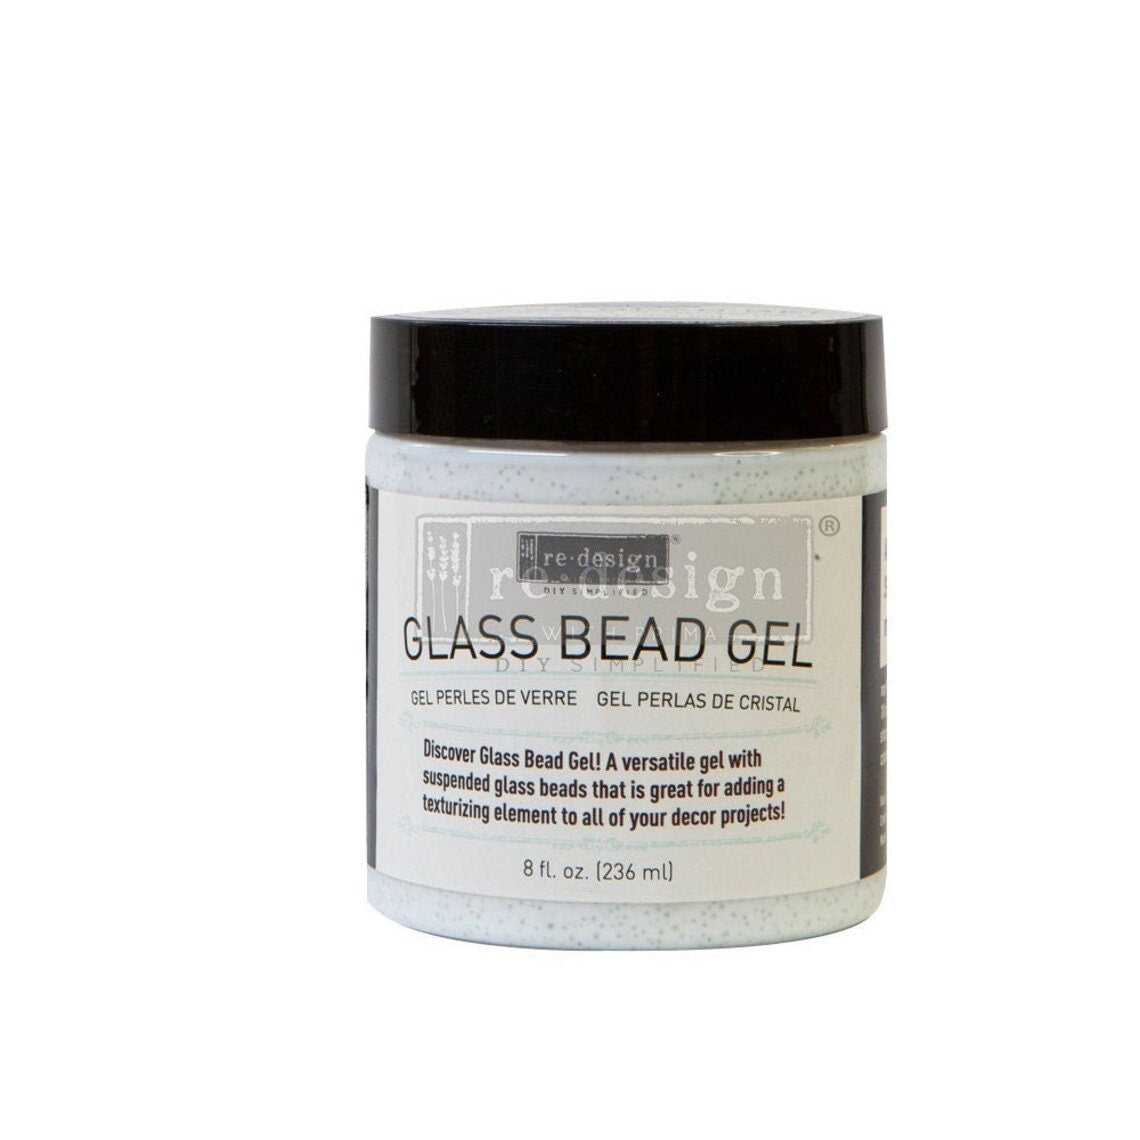 SAME DAY SHIPPING! Redesign Glass Bead Gel - 1 Jar - 236 ml - belleandbeau850